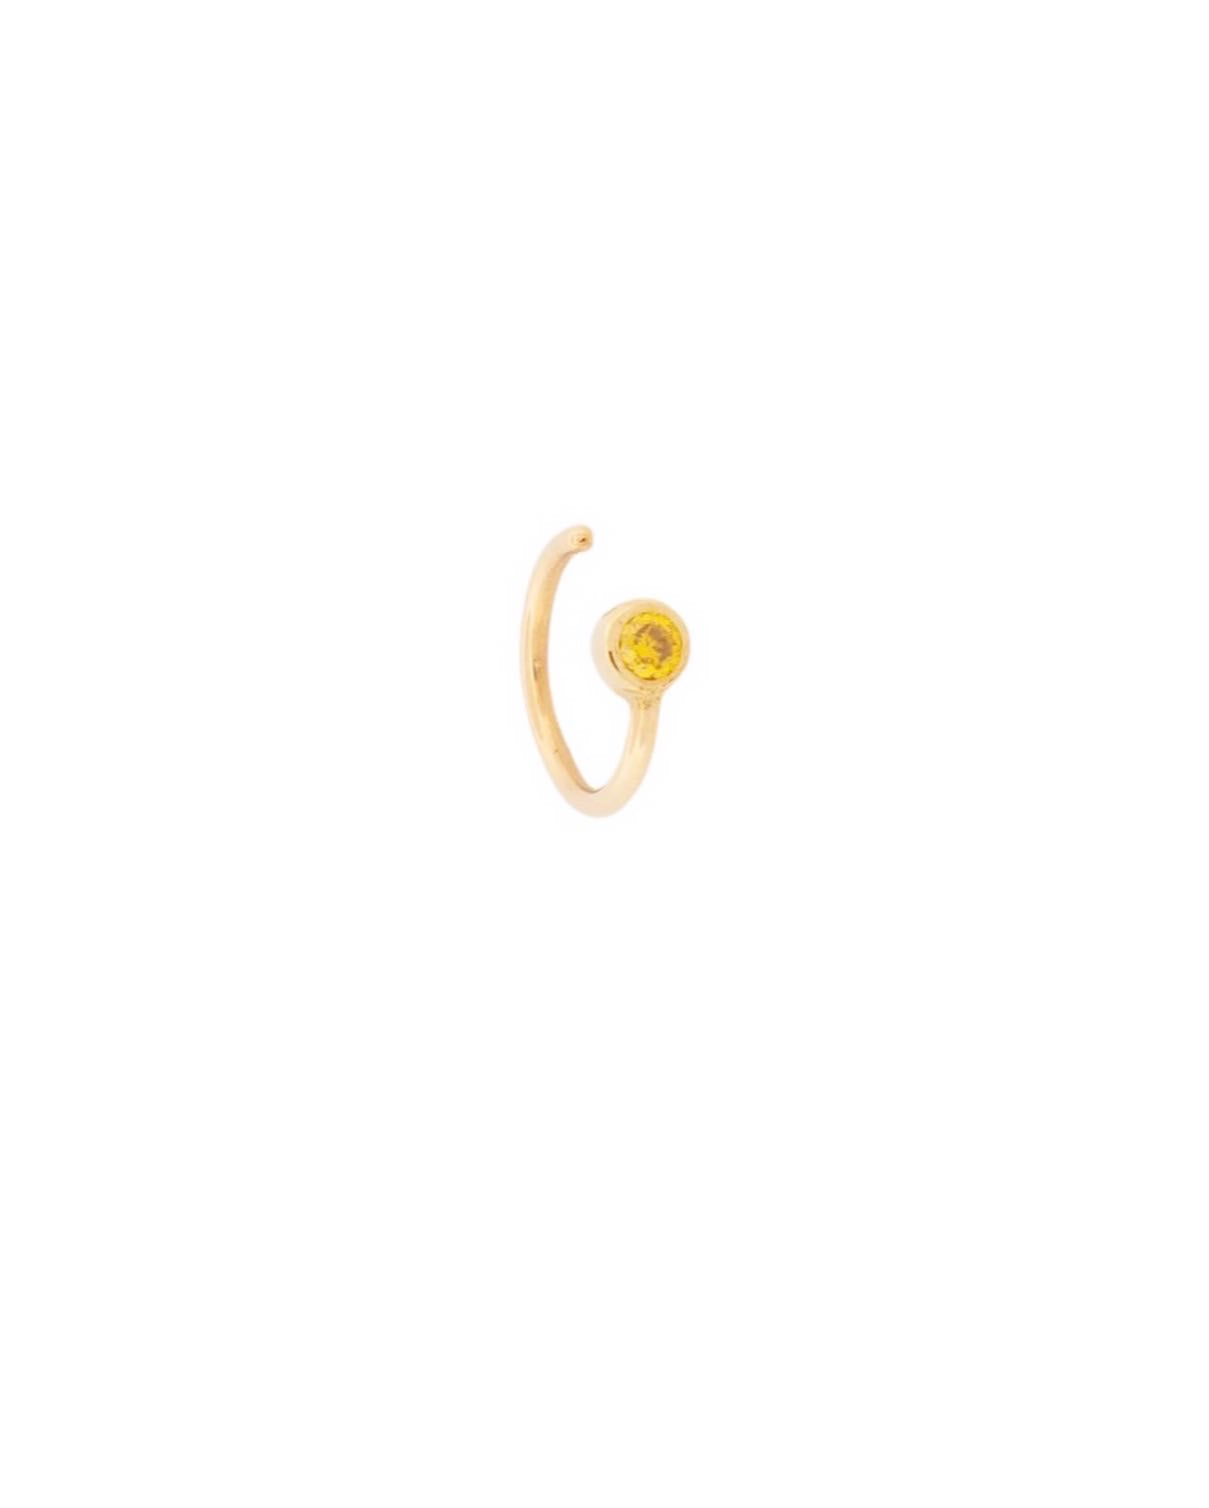 Cuffs 14 kt gold coloured diamond earrings